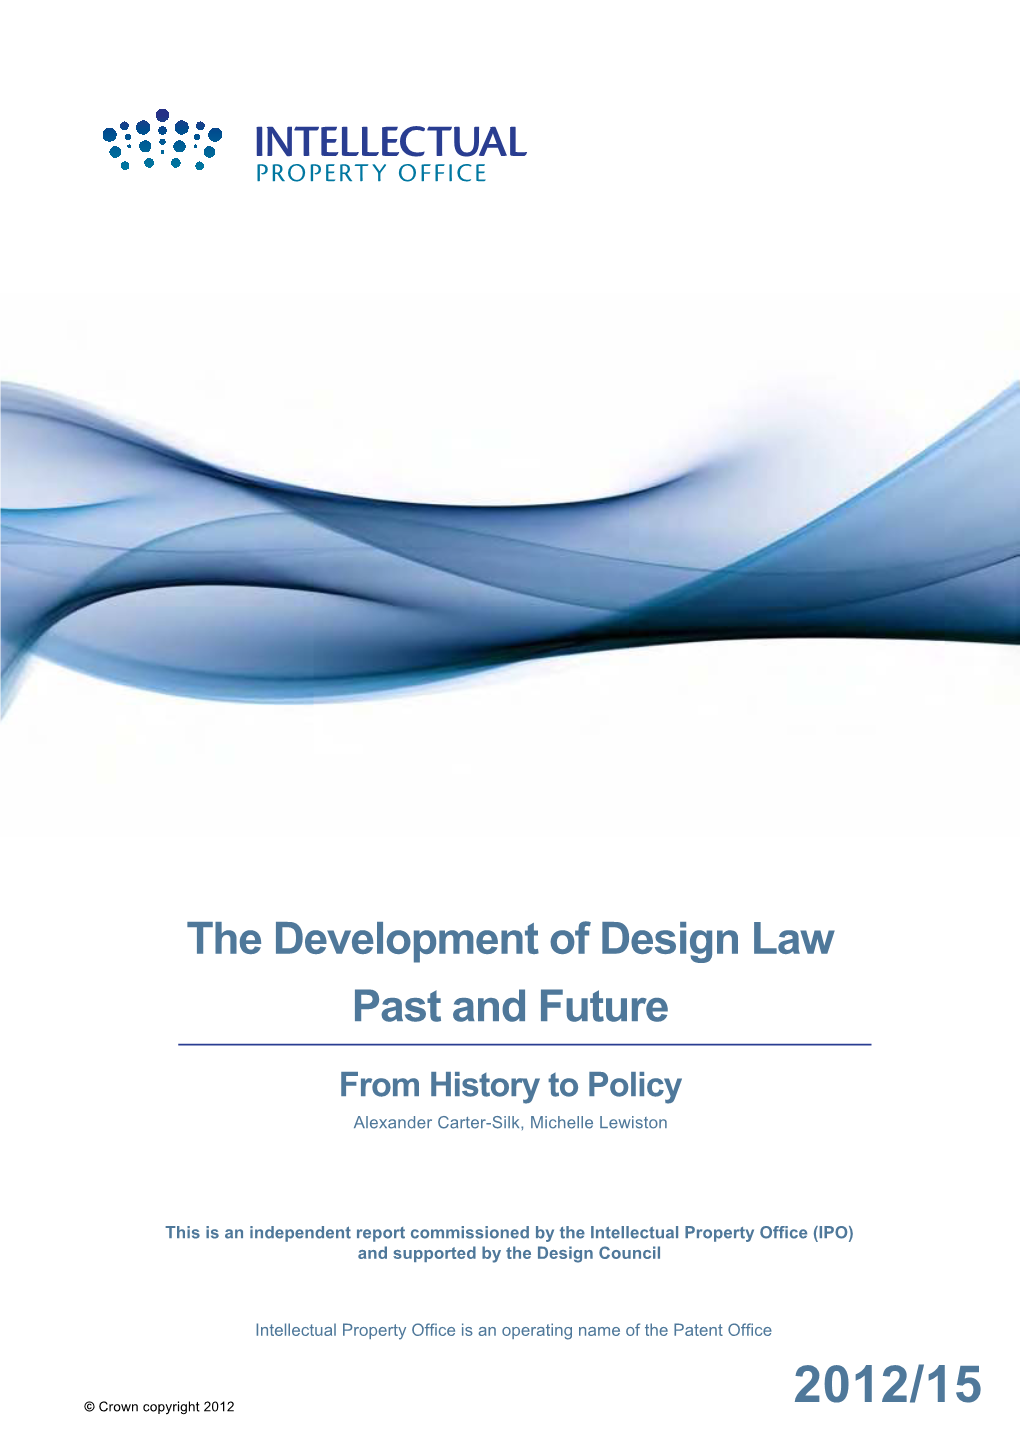 The Development of Design Law Past and Future